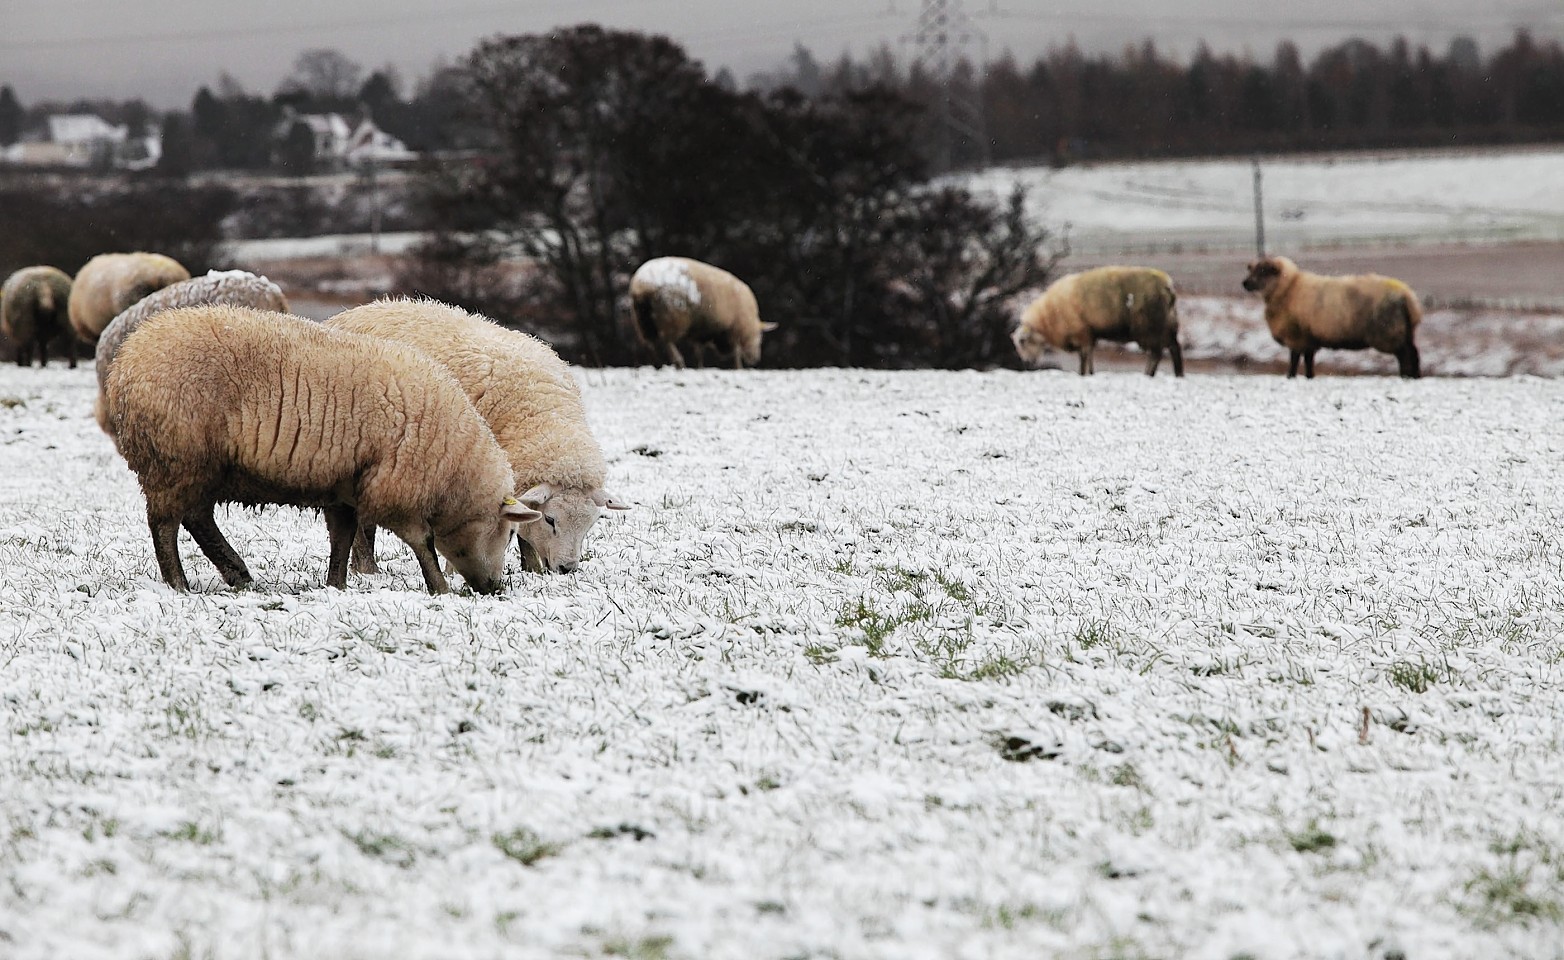 Snowy sheep in Perth 